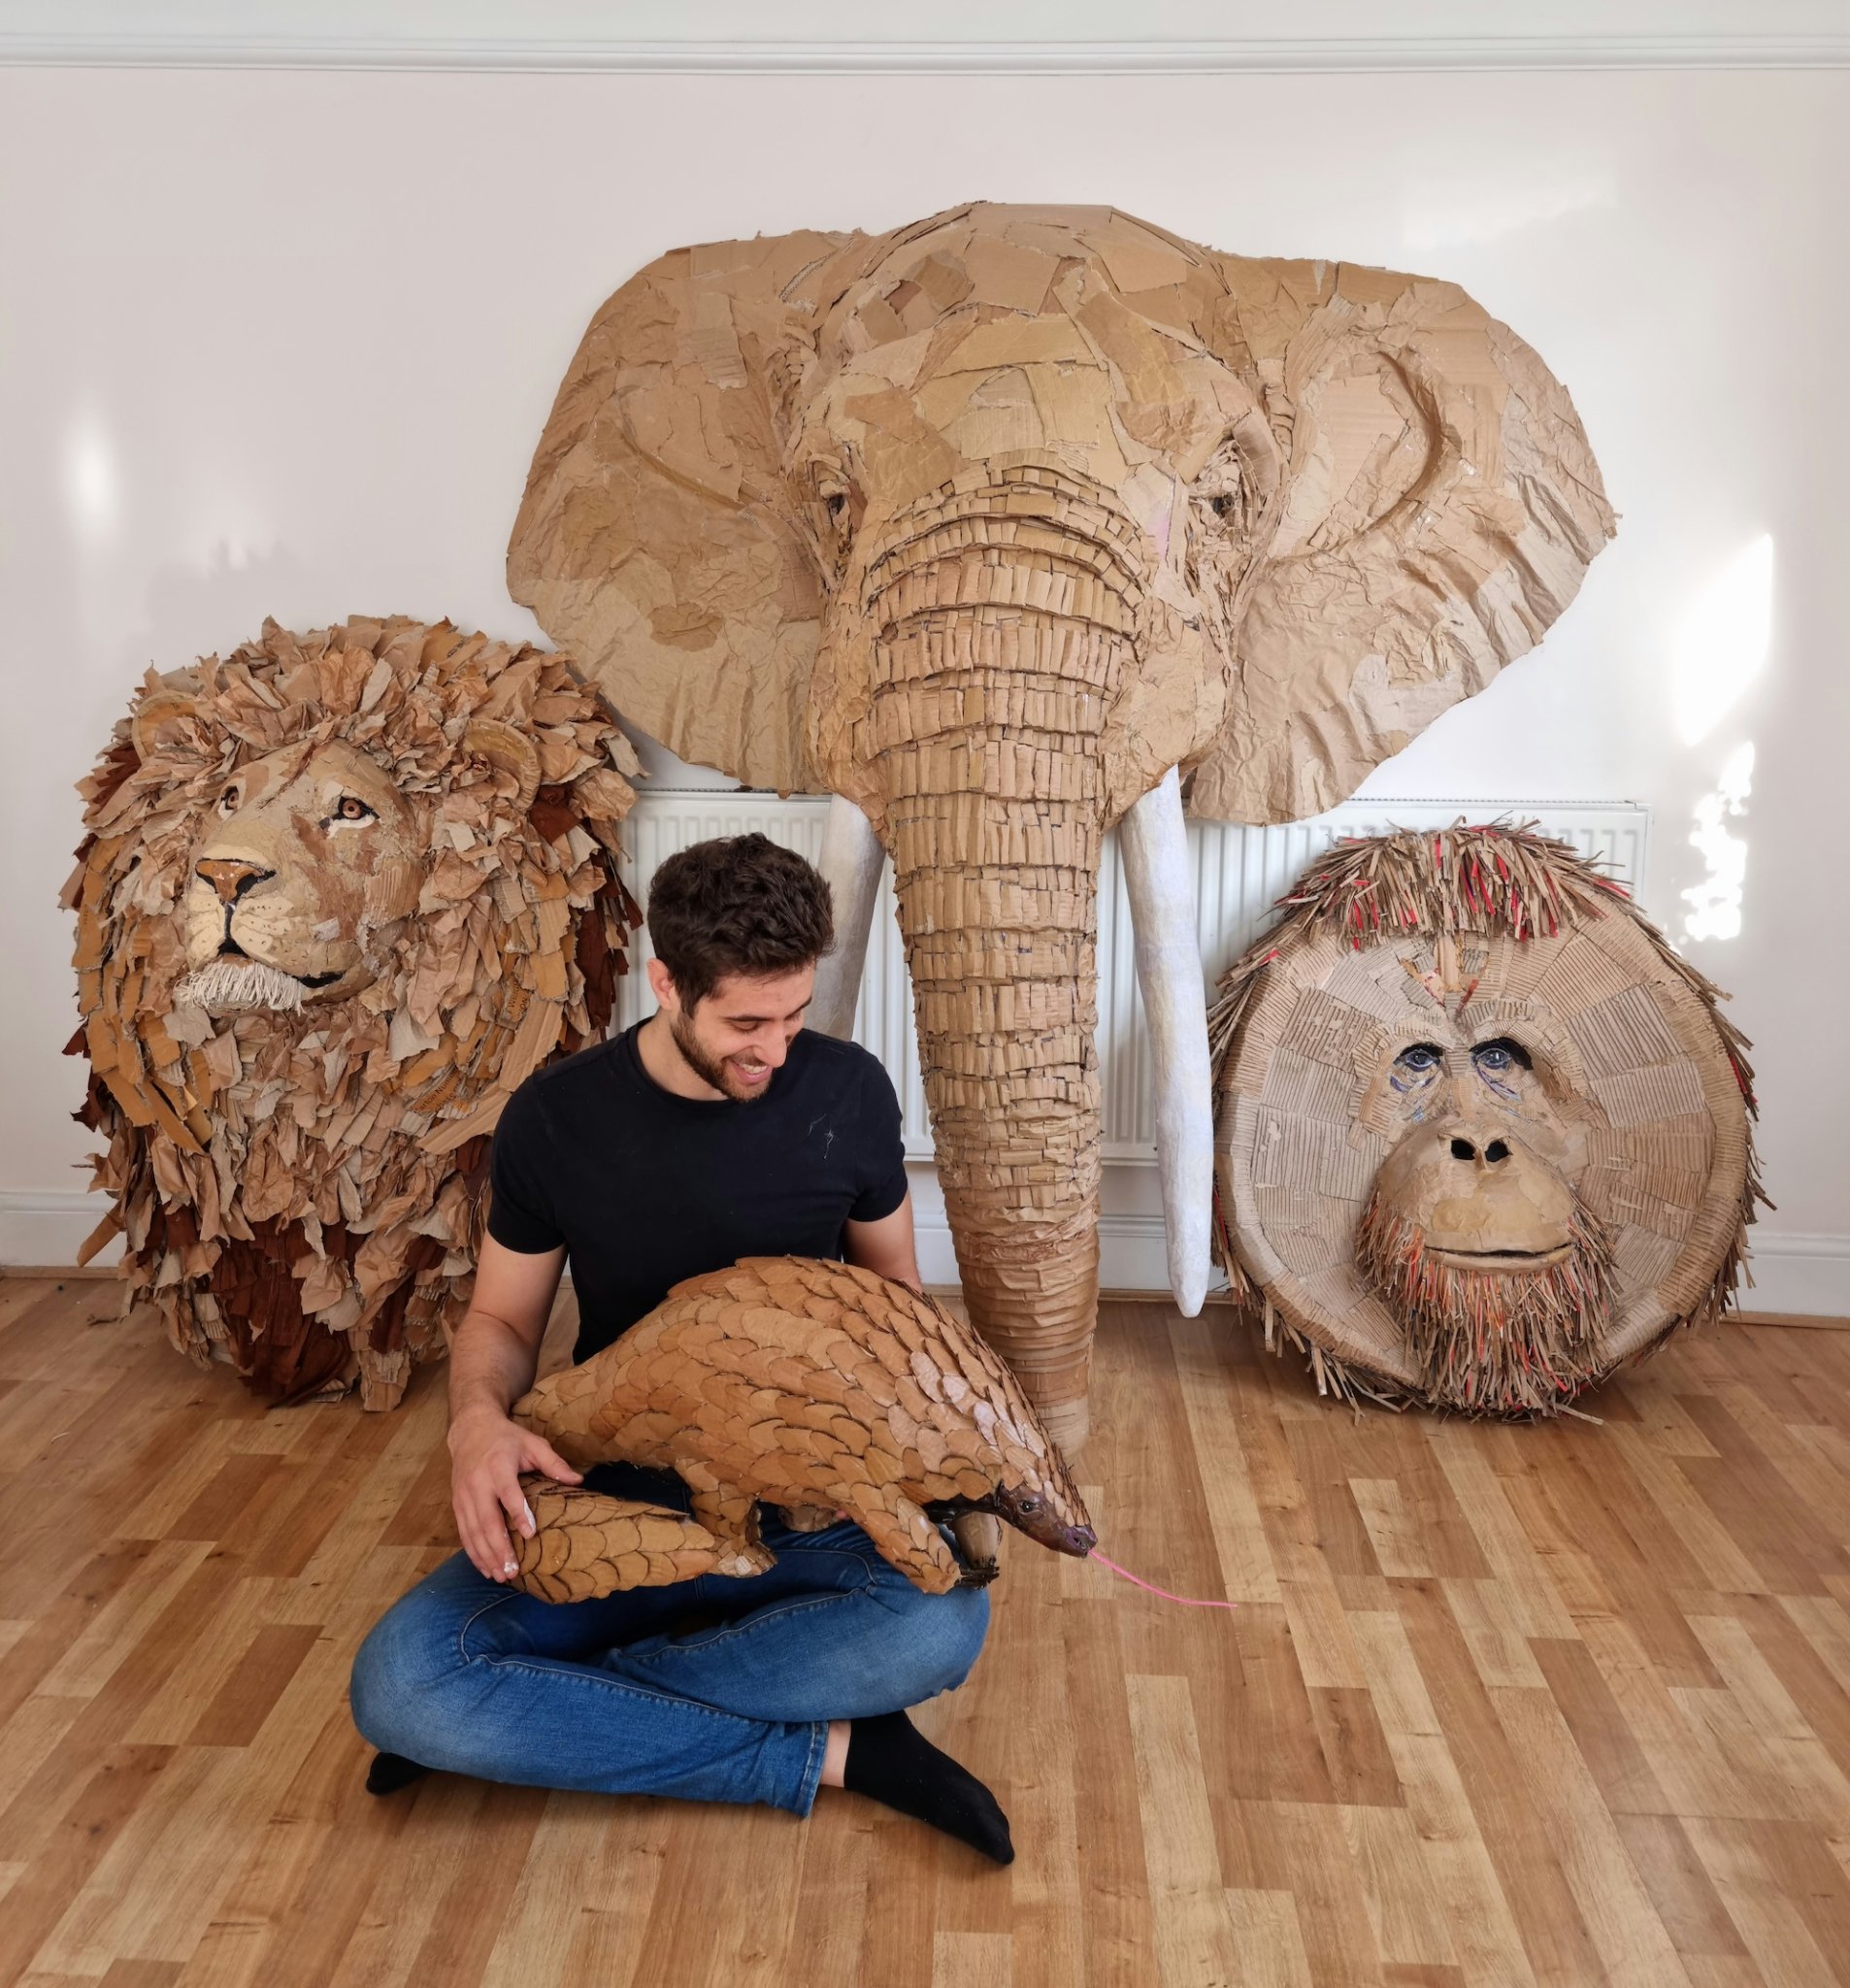 Incredibly Lifelike Cardboard Animal Sculptures by Josh Gluckstein